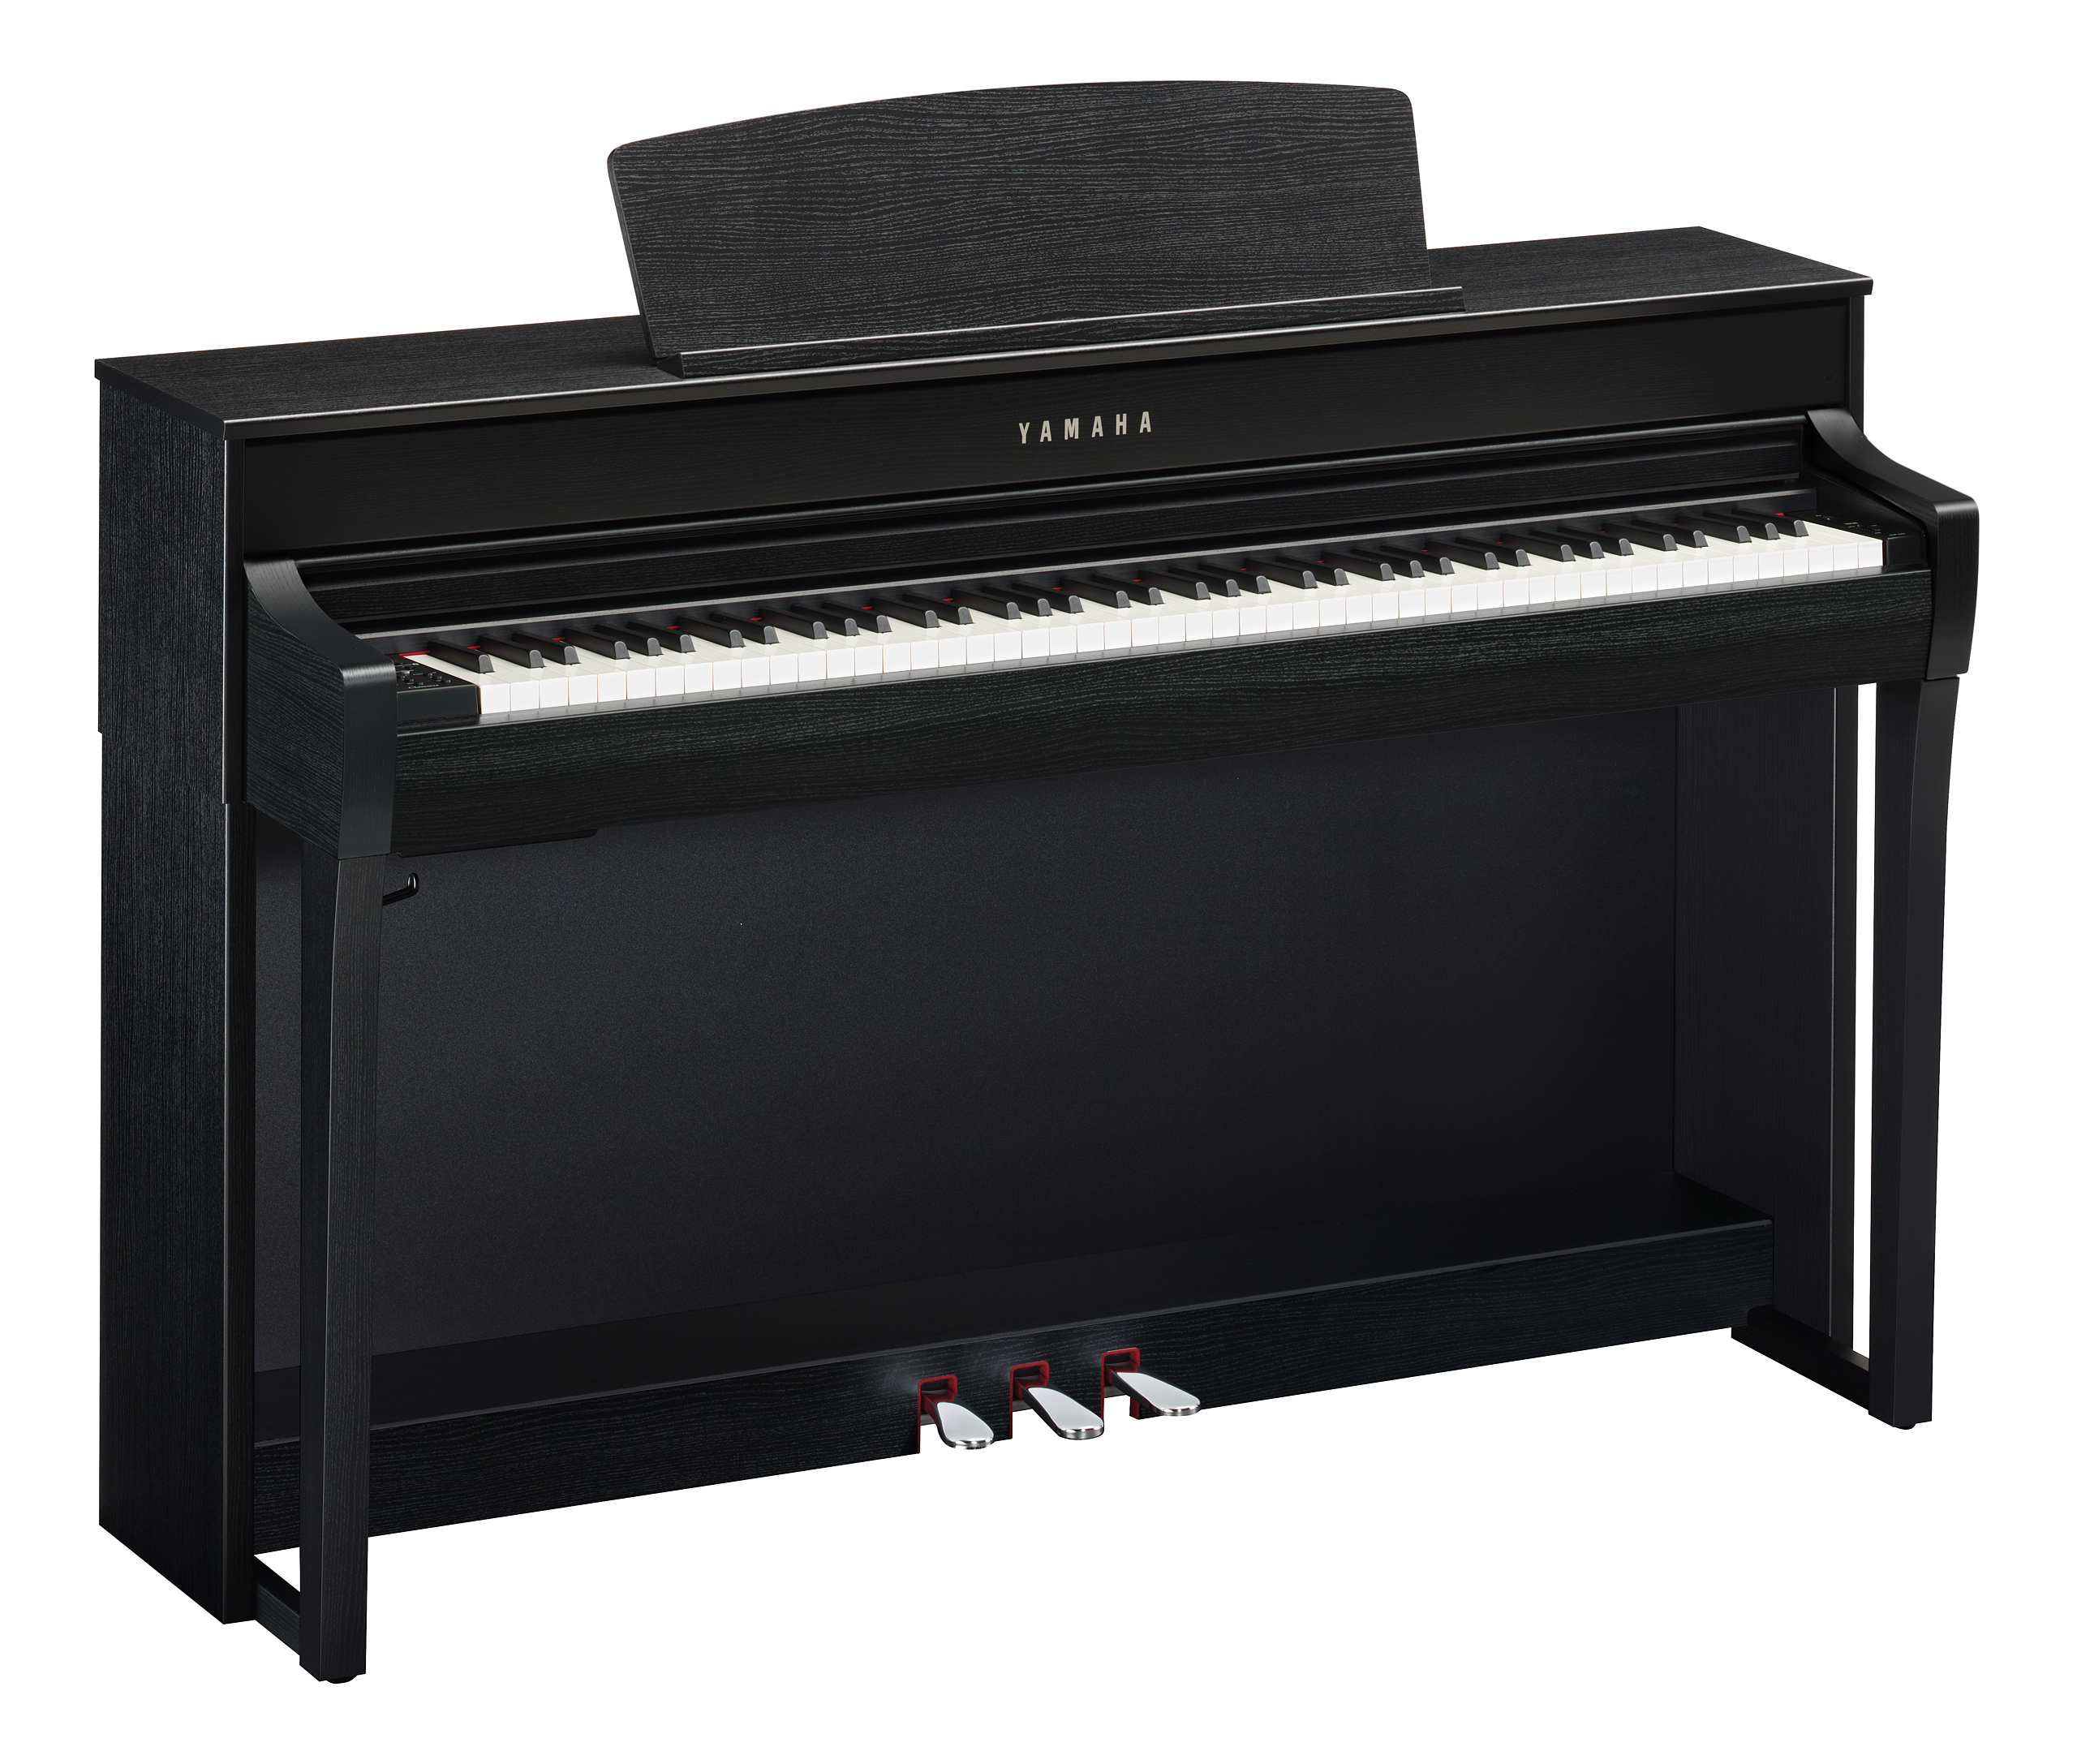 Yamaha Clp745b - Digital piano with stand - Variation 1